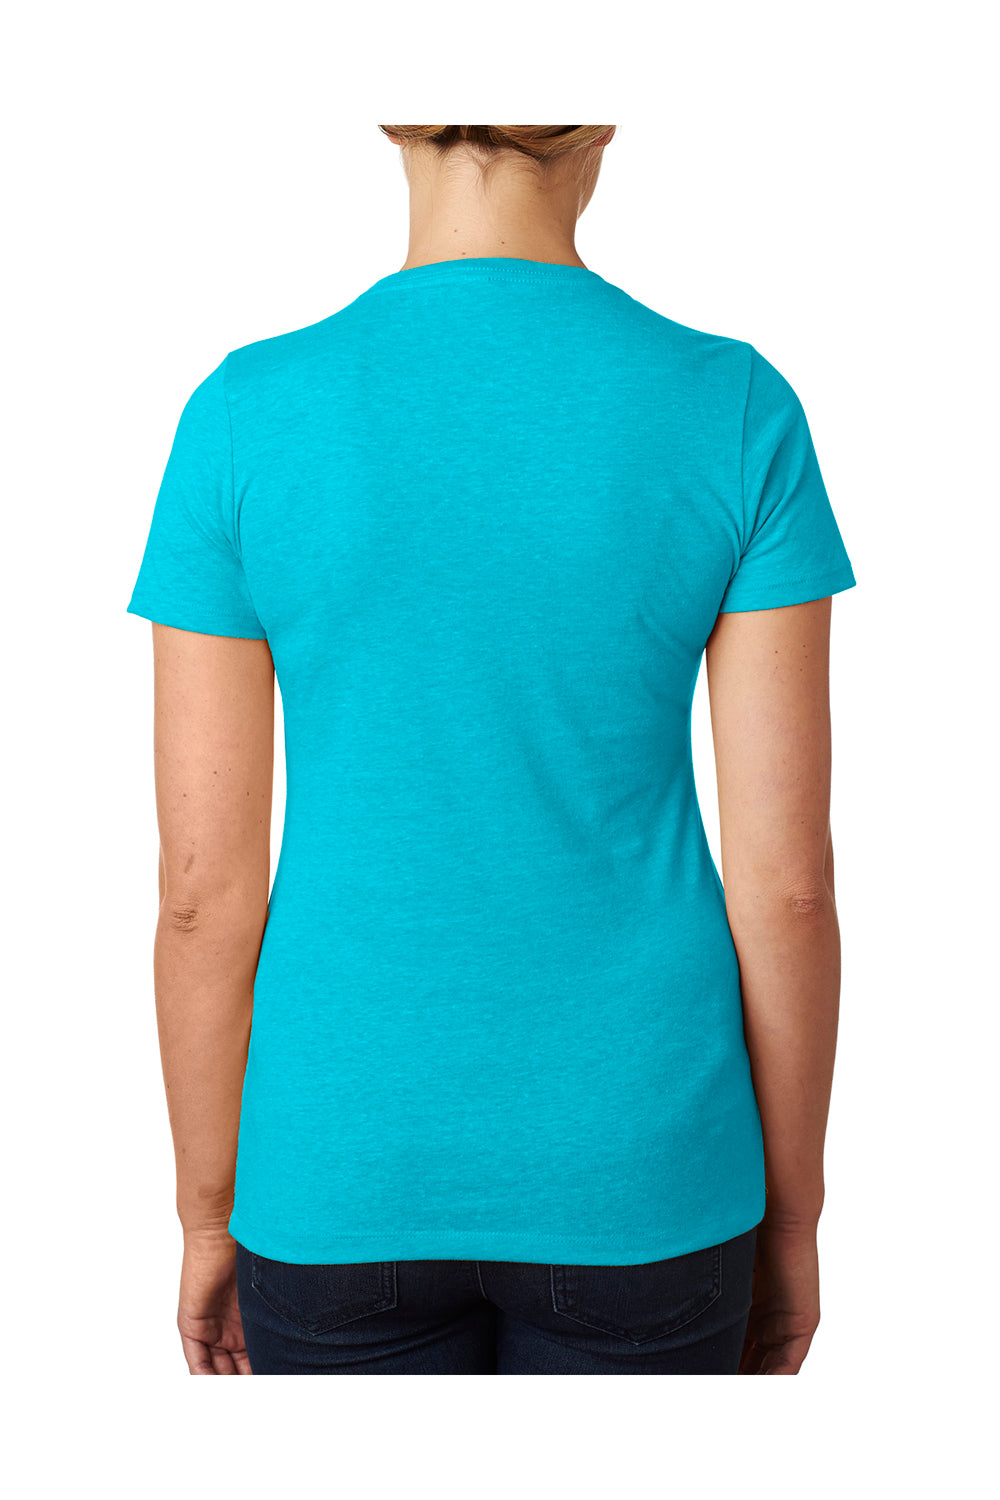 Next Level 6610 Womens CVC Jersey Short Sleeve Crewneck T-Shirt Bondi Blue Back